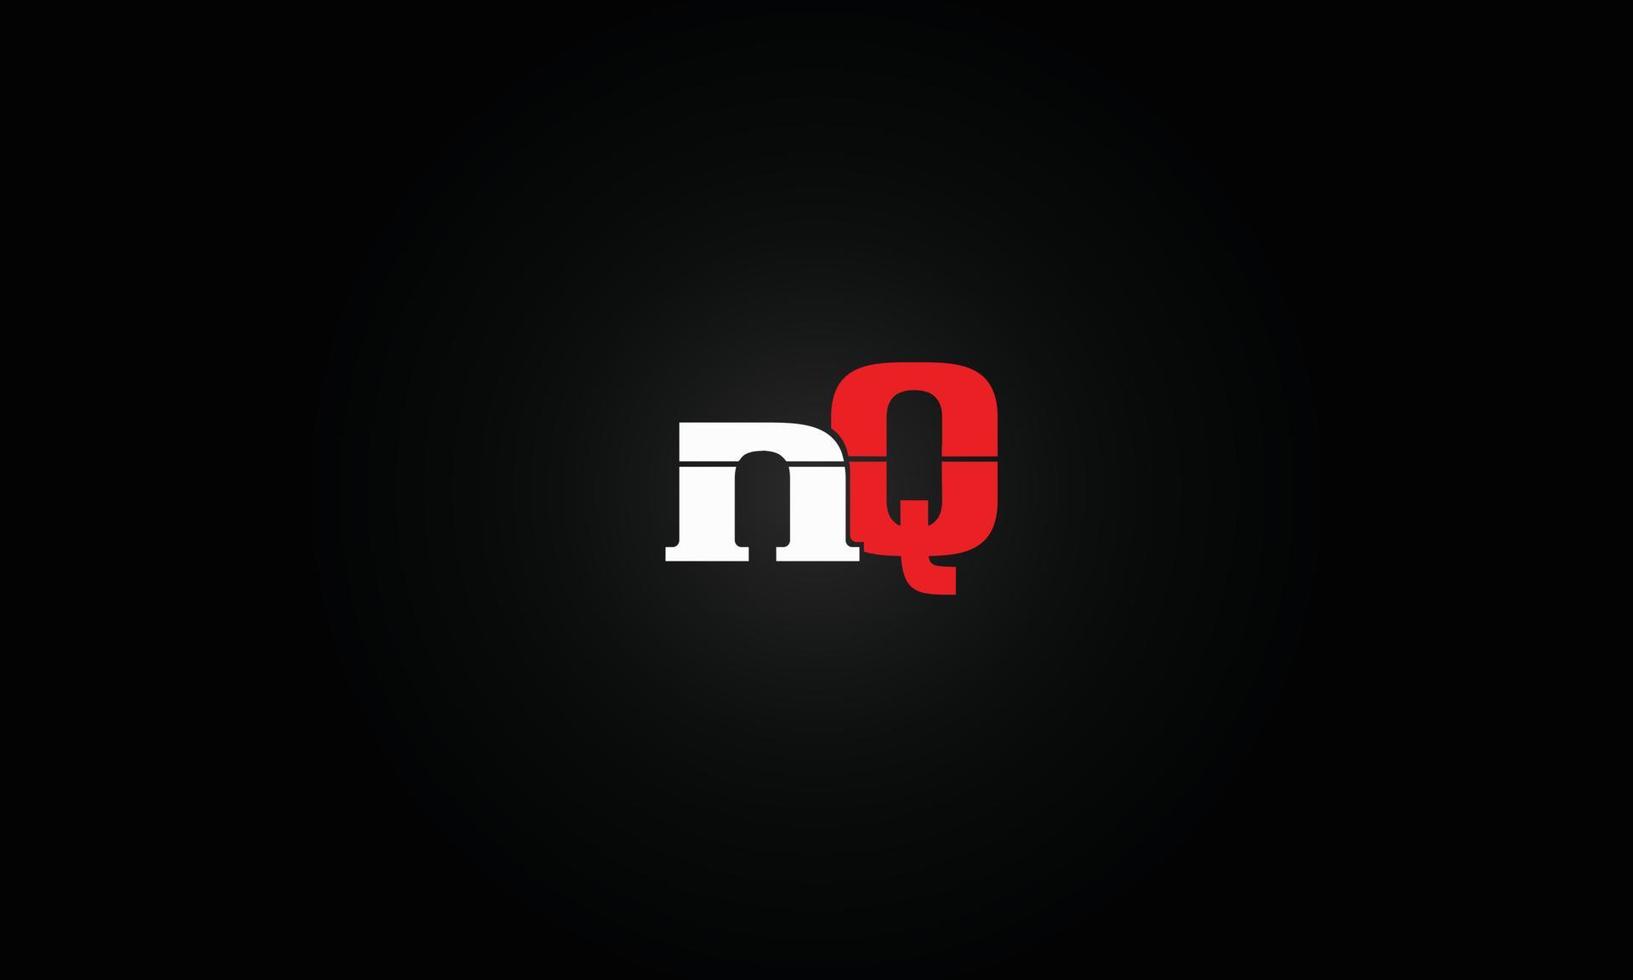 alfabet brieven initialen monogram logo nq, qn, n en q vector